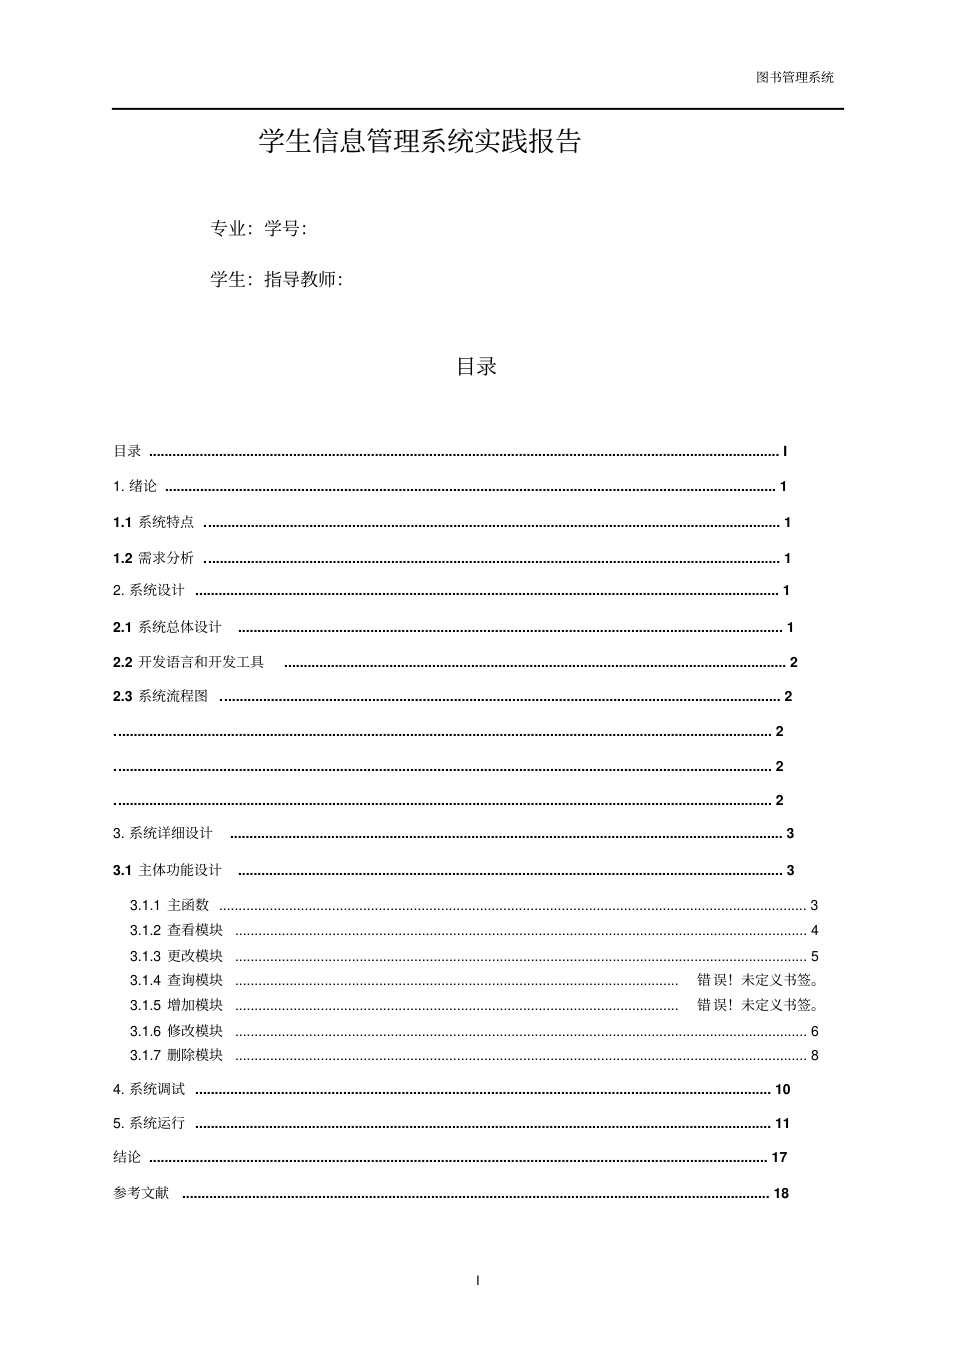 C语言项目报告文档_1.png